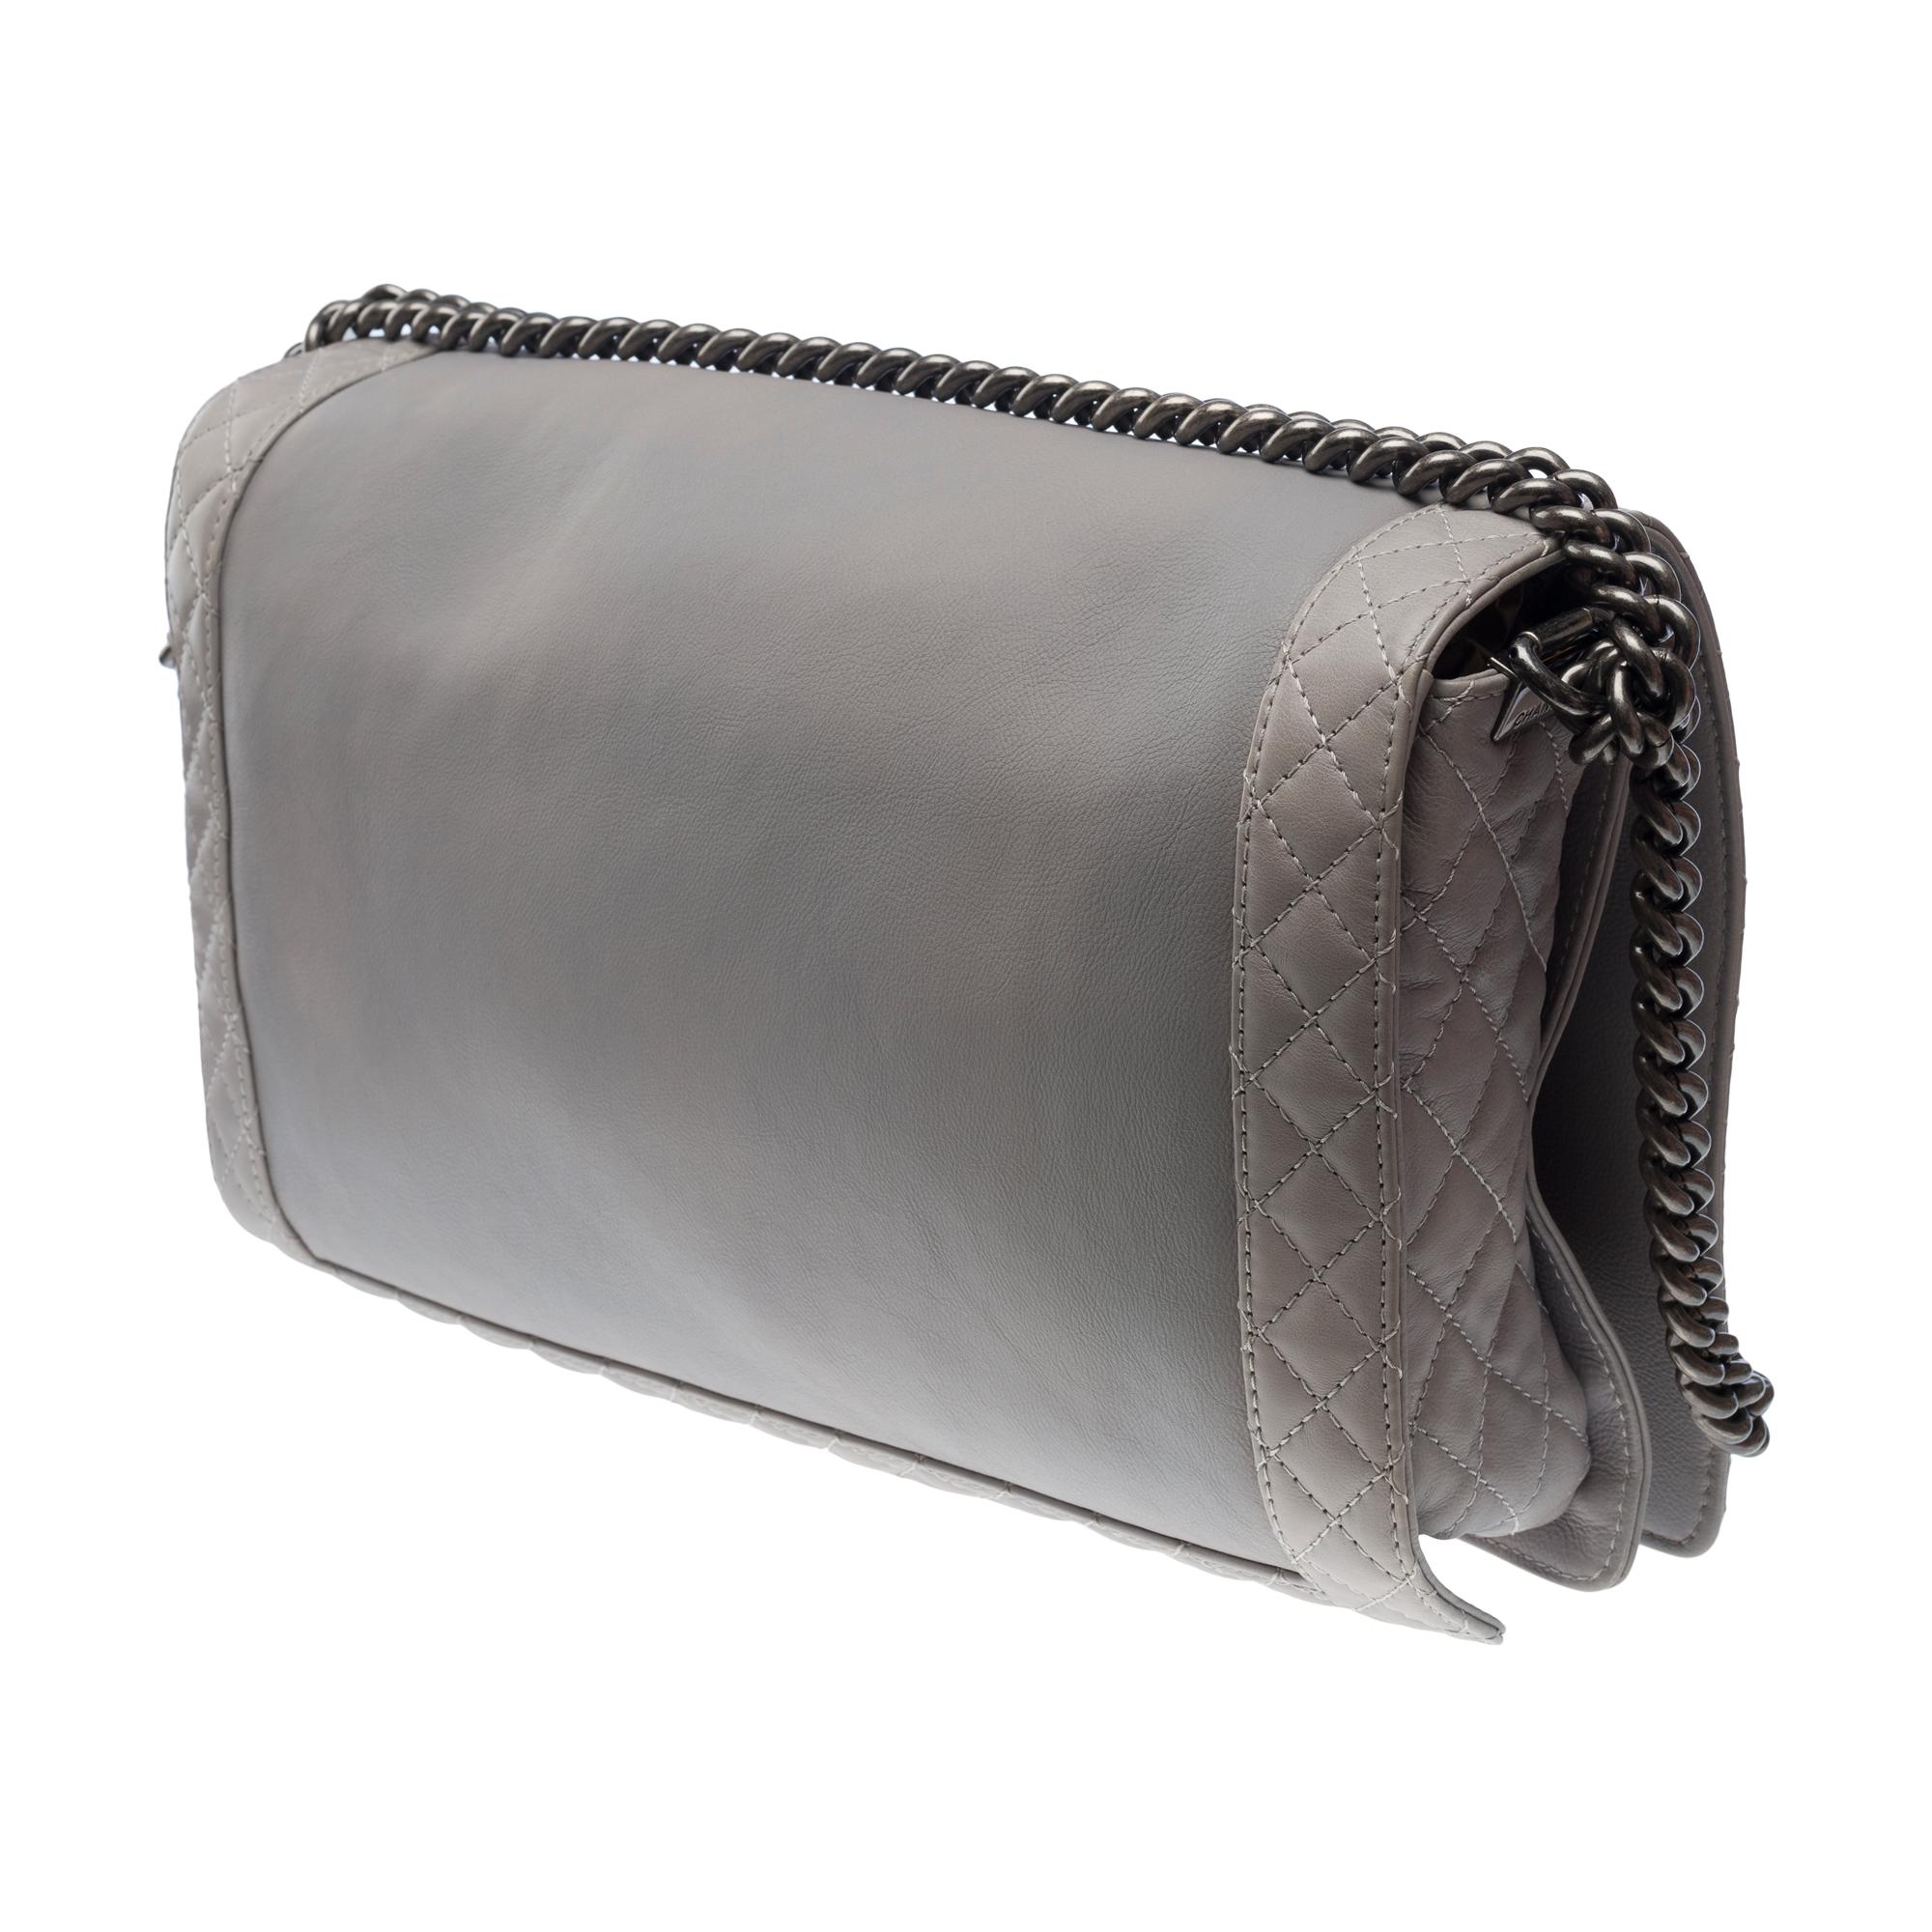 Chanel Boy Reverso Maxi Boy shoulder bag in Grey leather, RHW For Sale 1